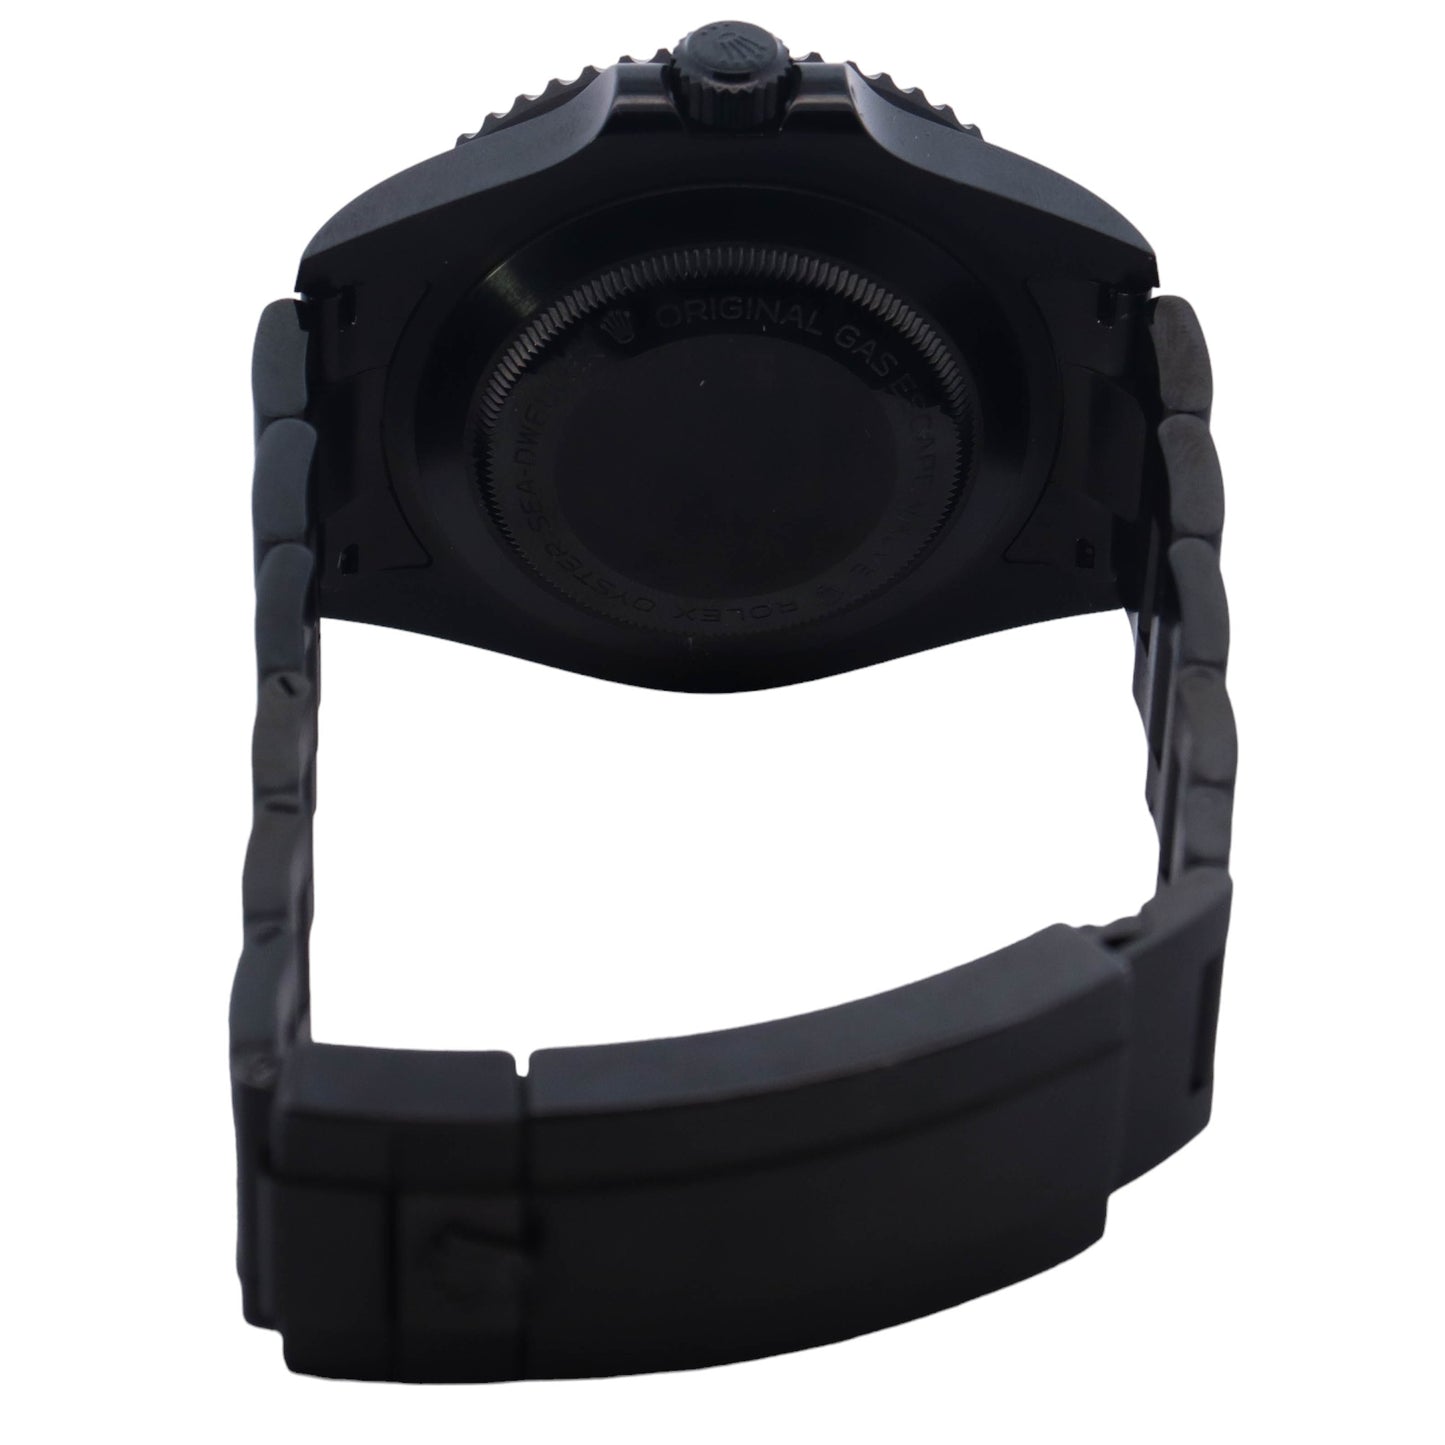 Rolex Sea Dweller Custom PVD 44mm Black Dot Dial Watch Reference# 126600 - Happy Jewelers Fine Jewelry Lifetime Warranty